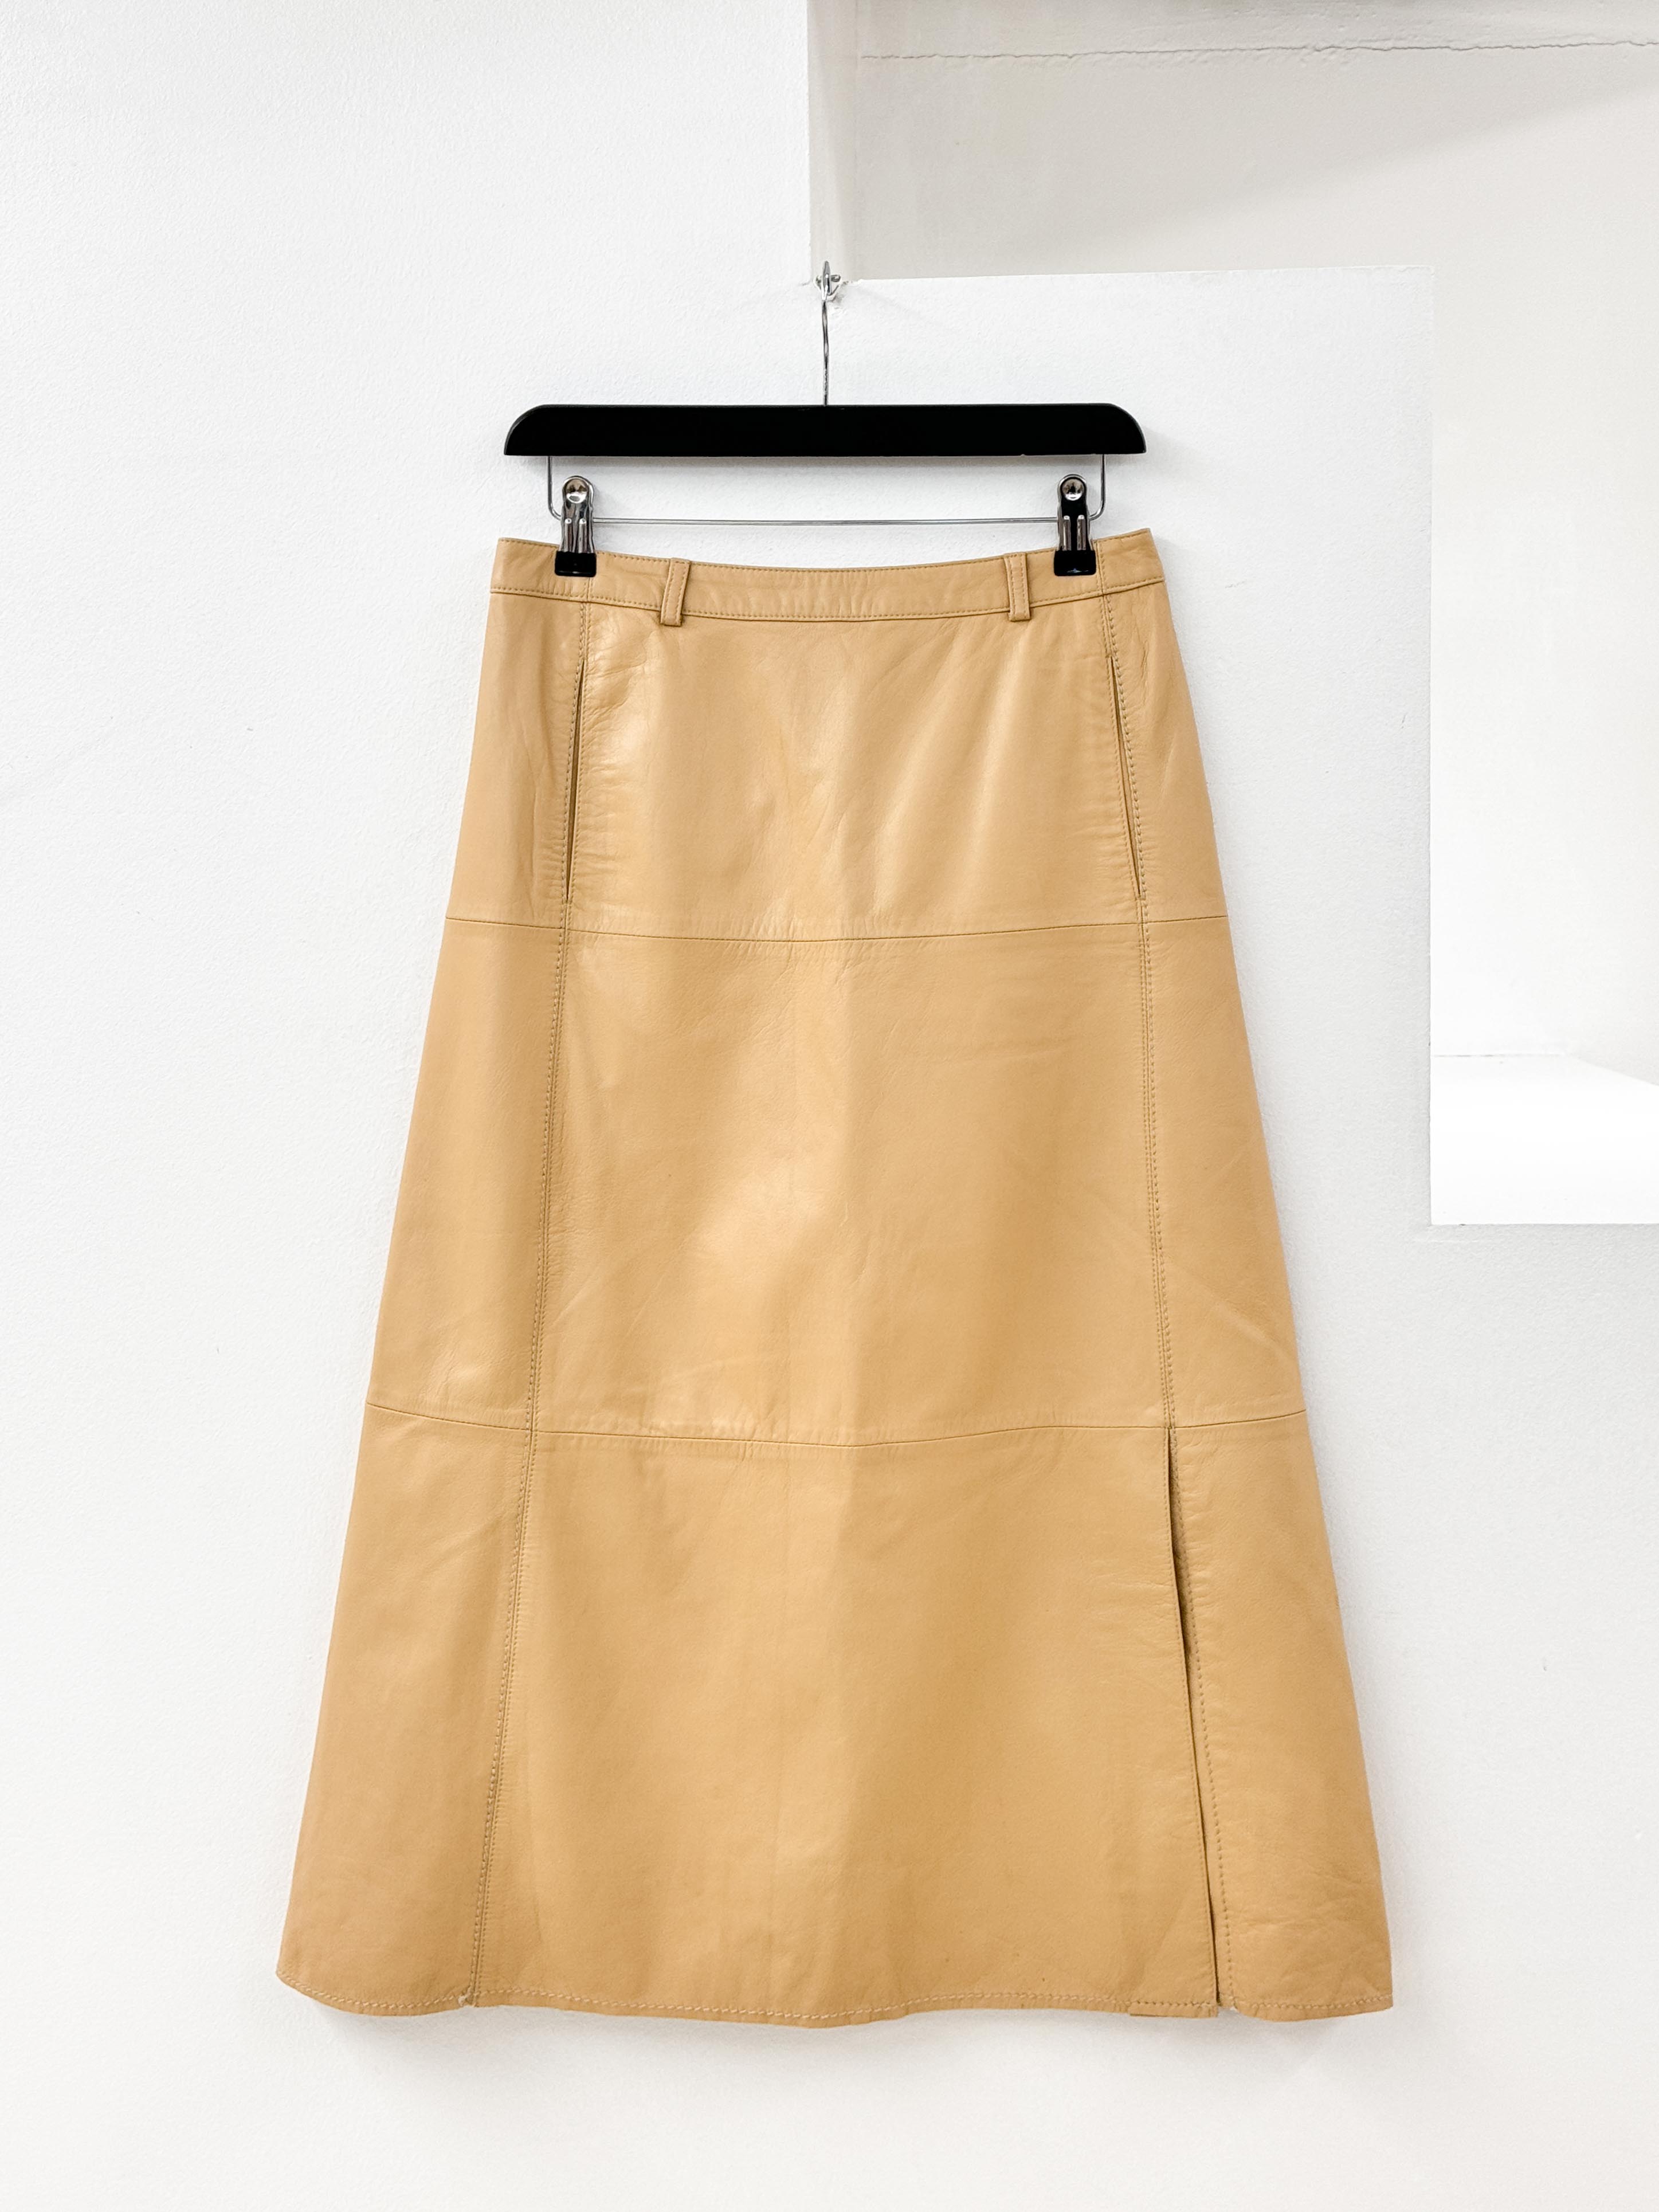 Issey Miyake HAI leather skirt 29inch